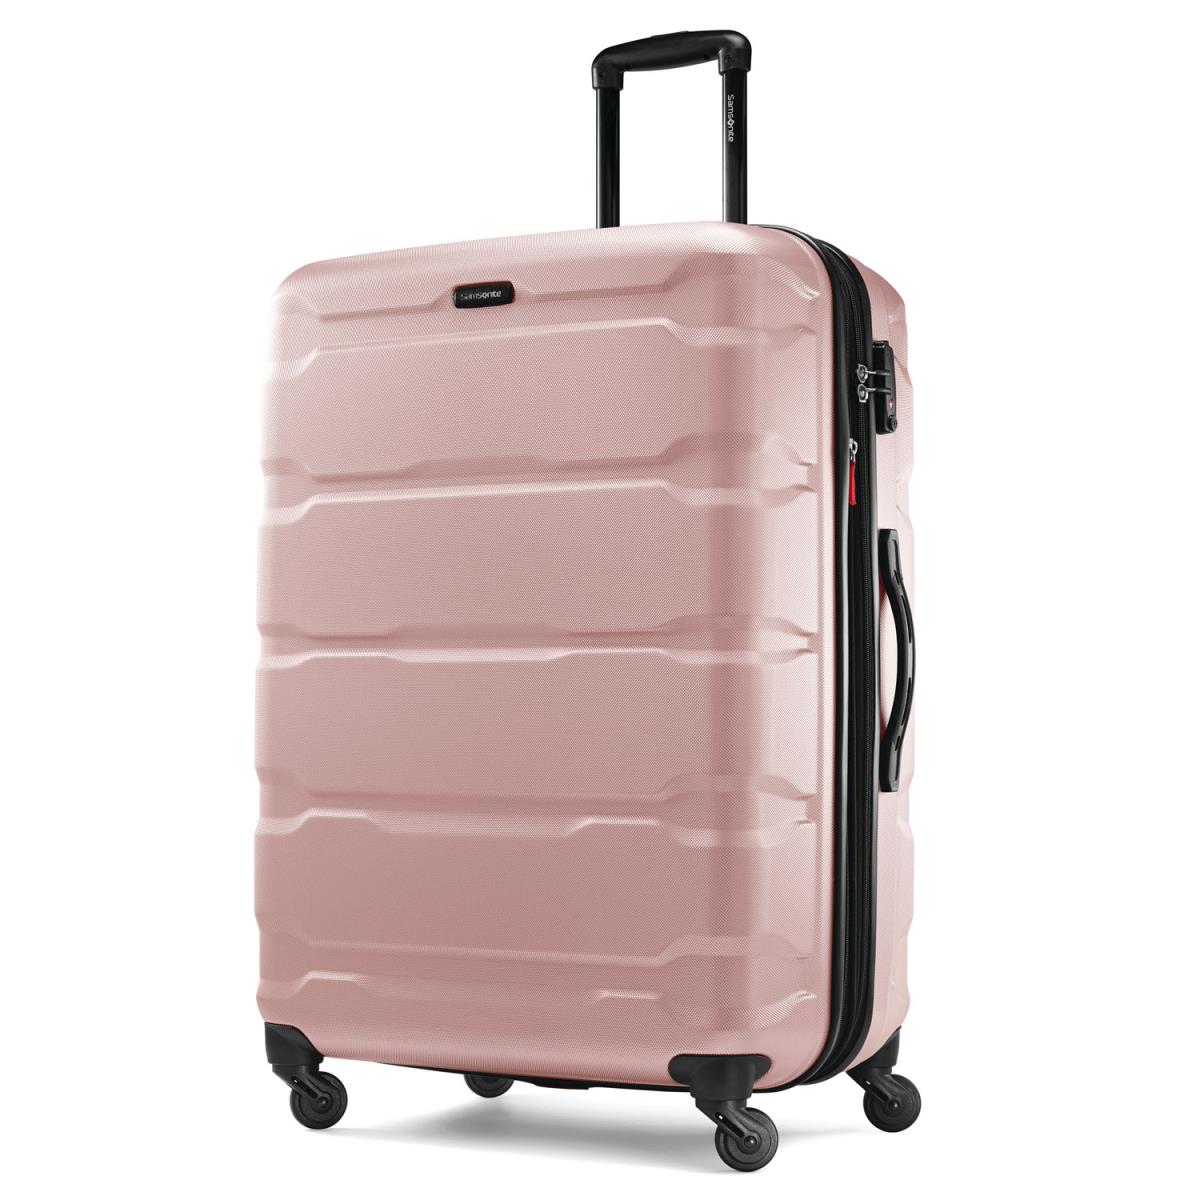 Samsonite Omni Hardside Spinner Suitcase Luggage Pink Rose - 20 / 24 / 28 28 inch (68310-1694)